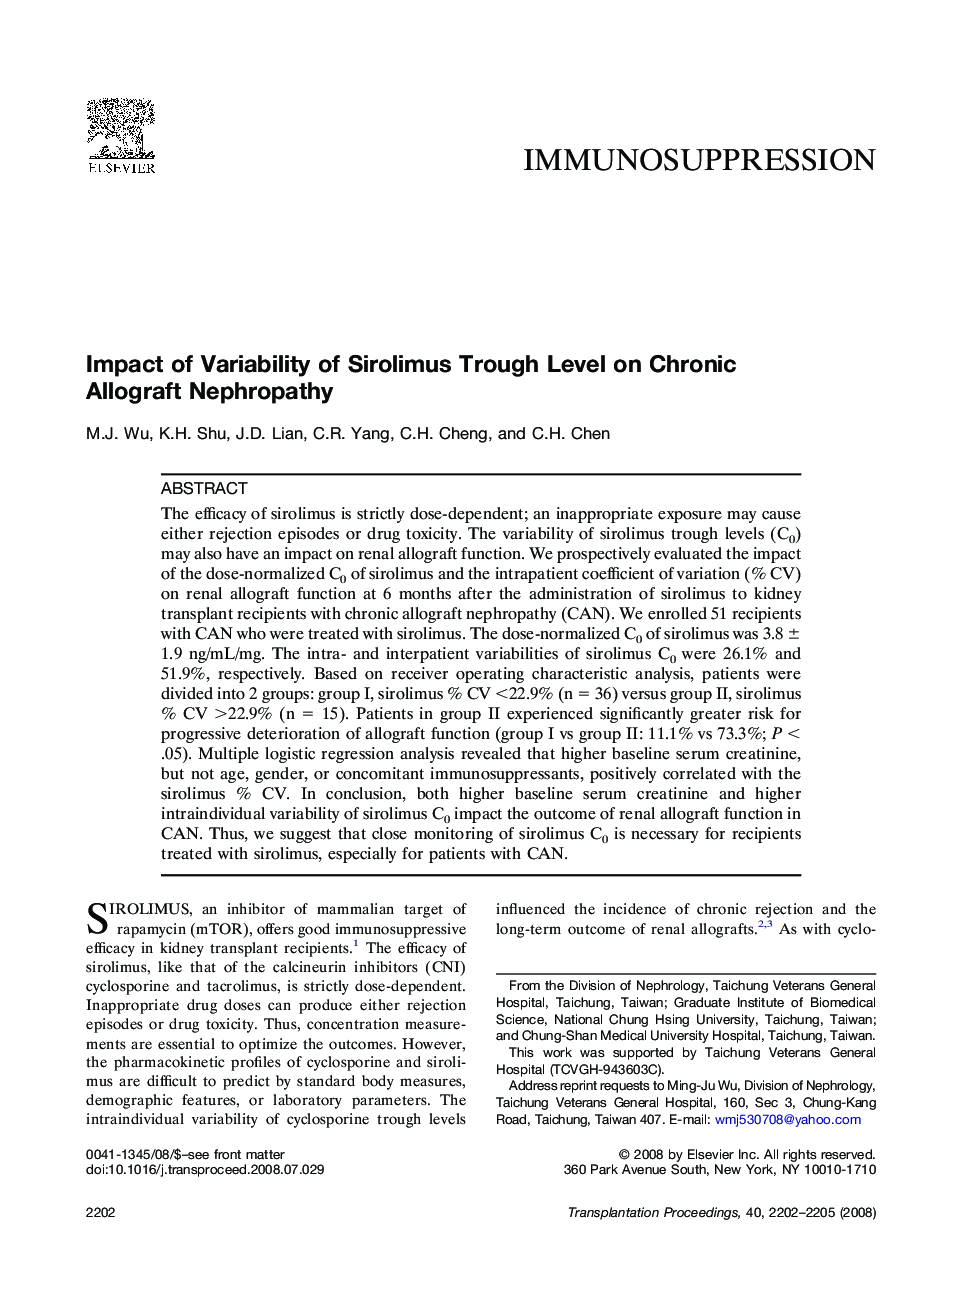 Impact of Variability of Sirolimus Trough Level on Chronic Allograft Nephropathy 